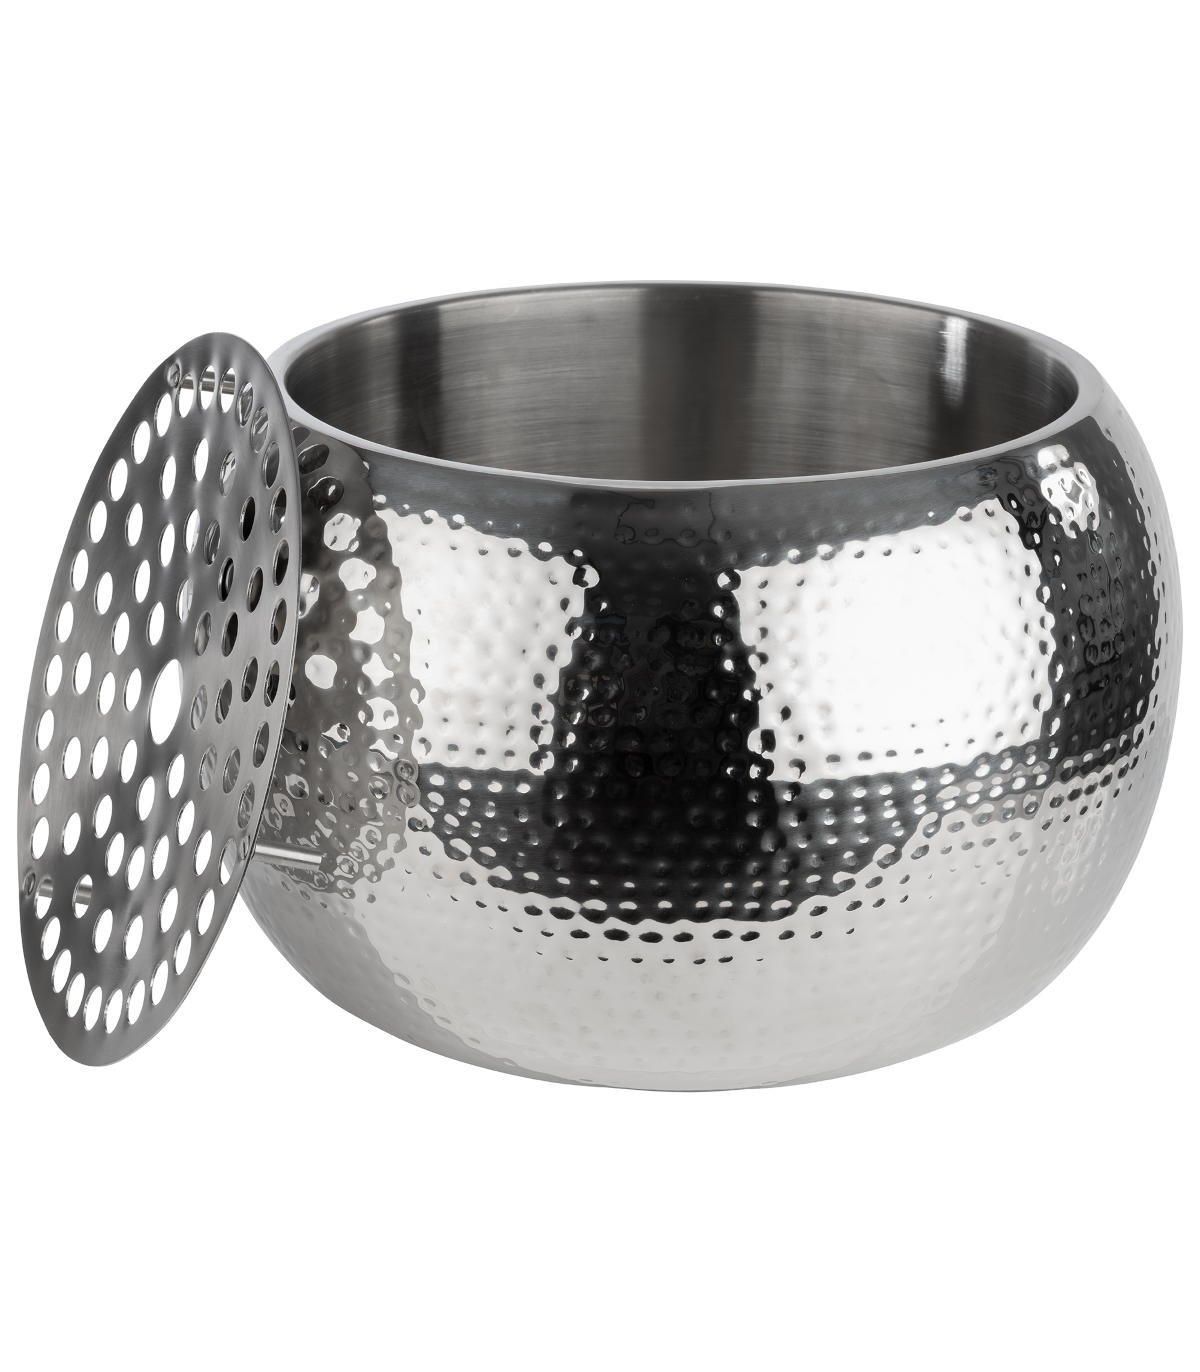 https://www.stellinox.com/5360-superlarge_default/stainless-steel-bottle-cooler-with-drip-tray-big-bowl.jpg